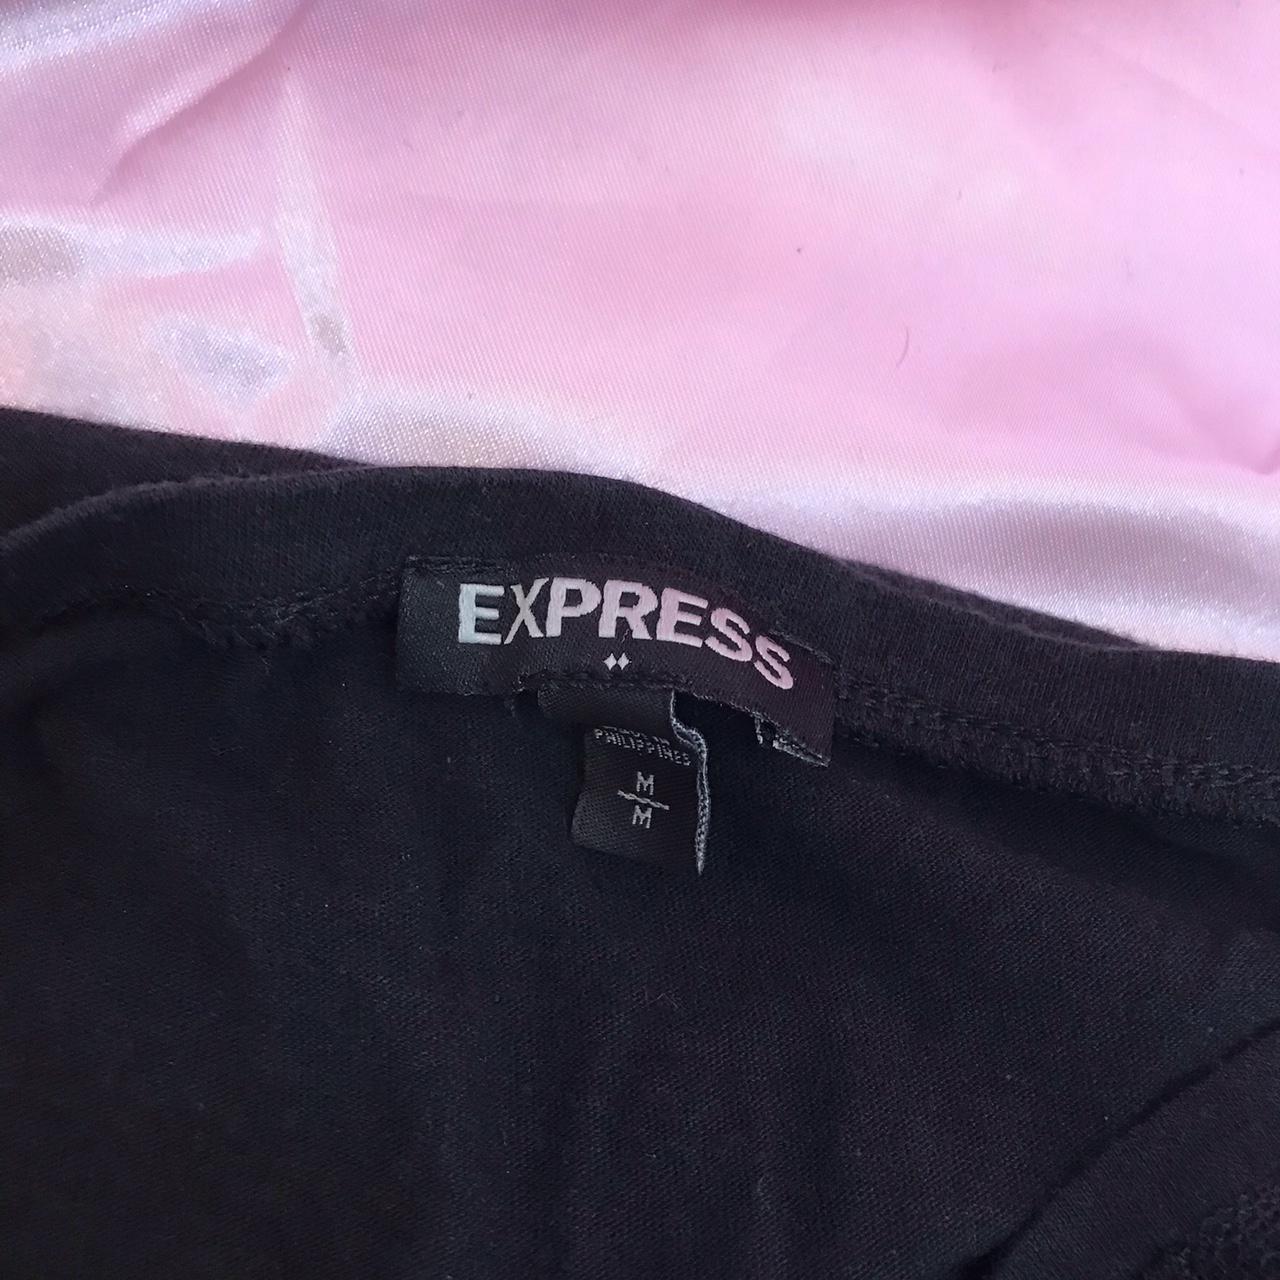 Express Women's Black Vests-tanks-camis (3)